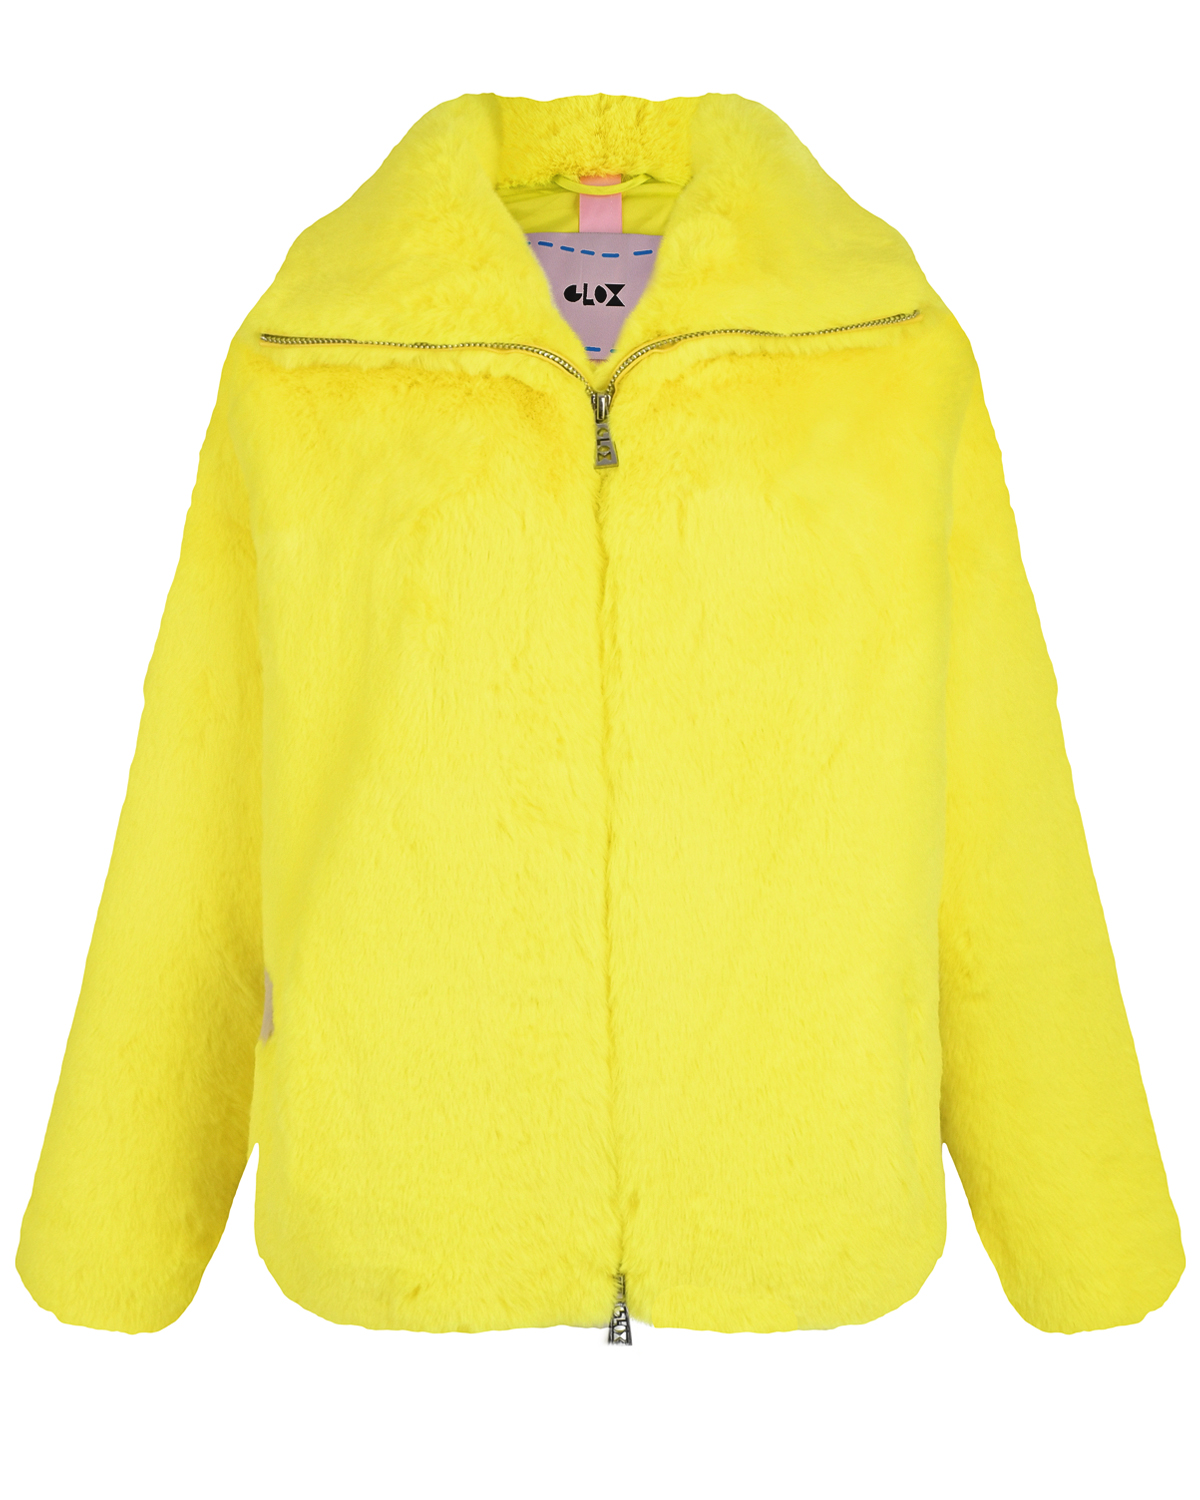 Желтая куртка из эко-меха Glox, размер 40, цвет желтый